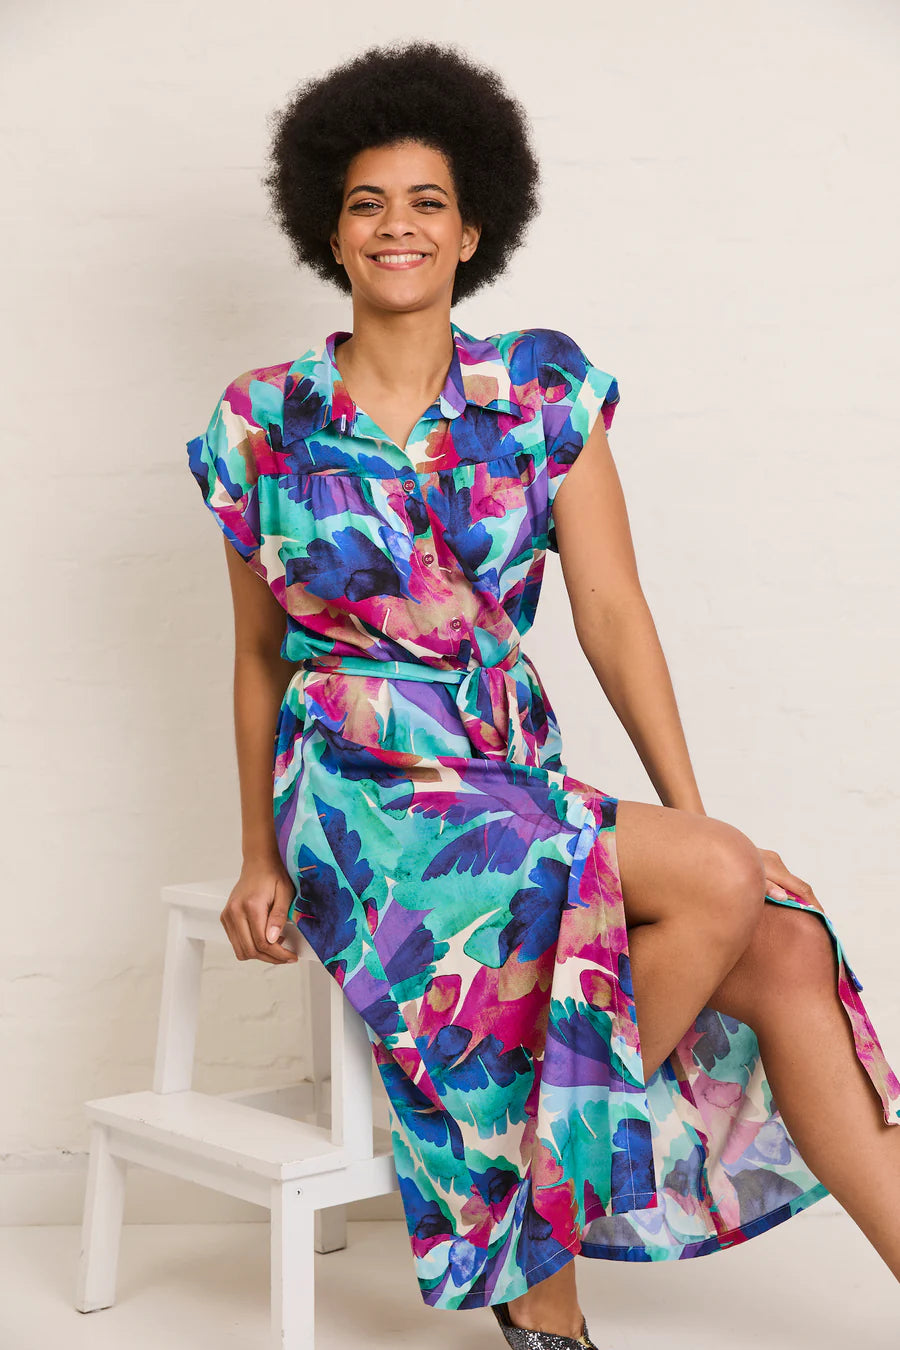 Atelier Jupe - Ava Summer Dress Sewing Pattern